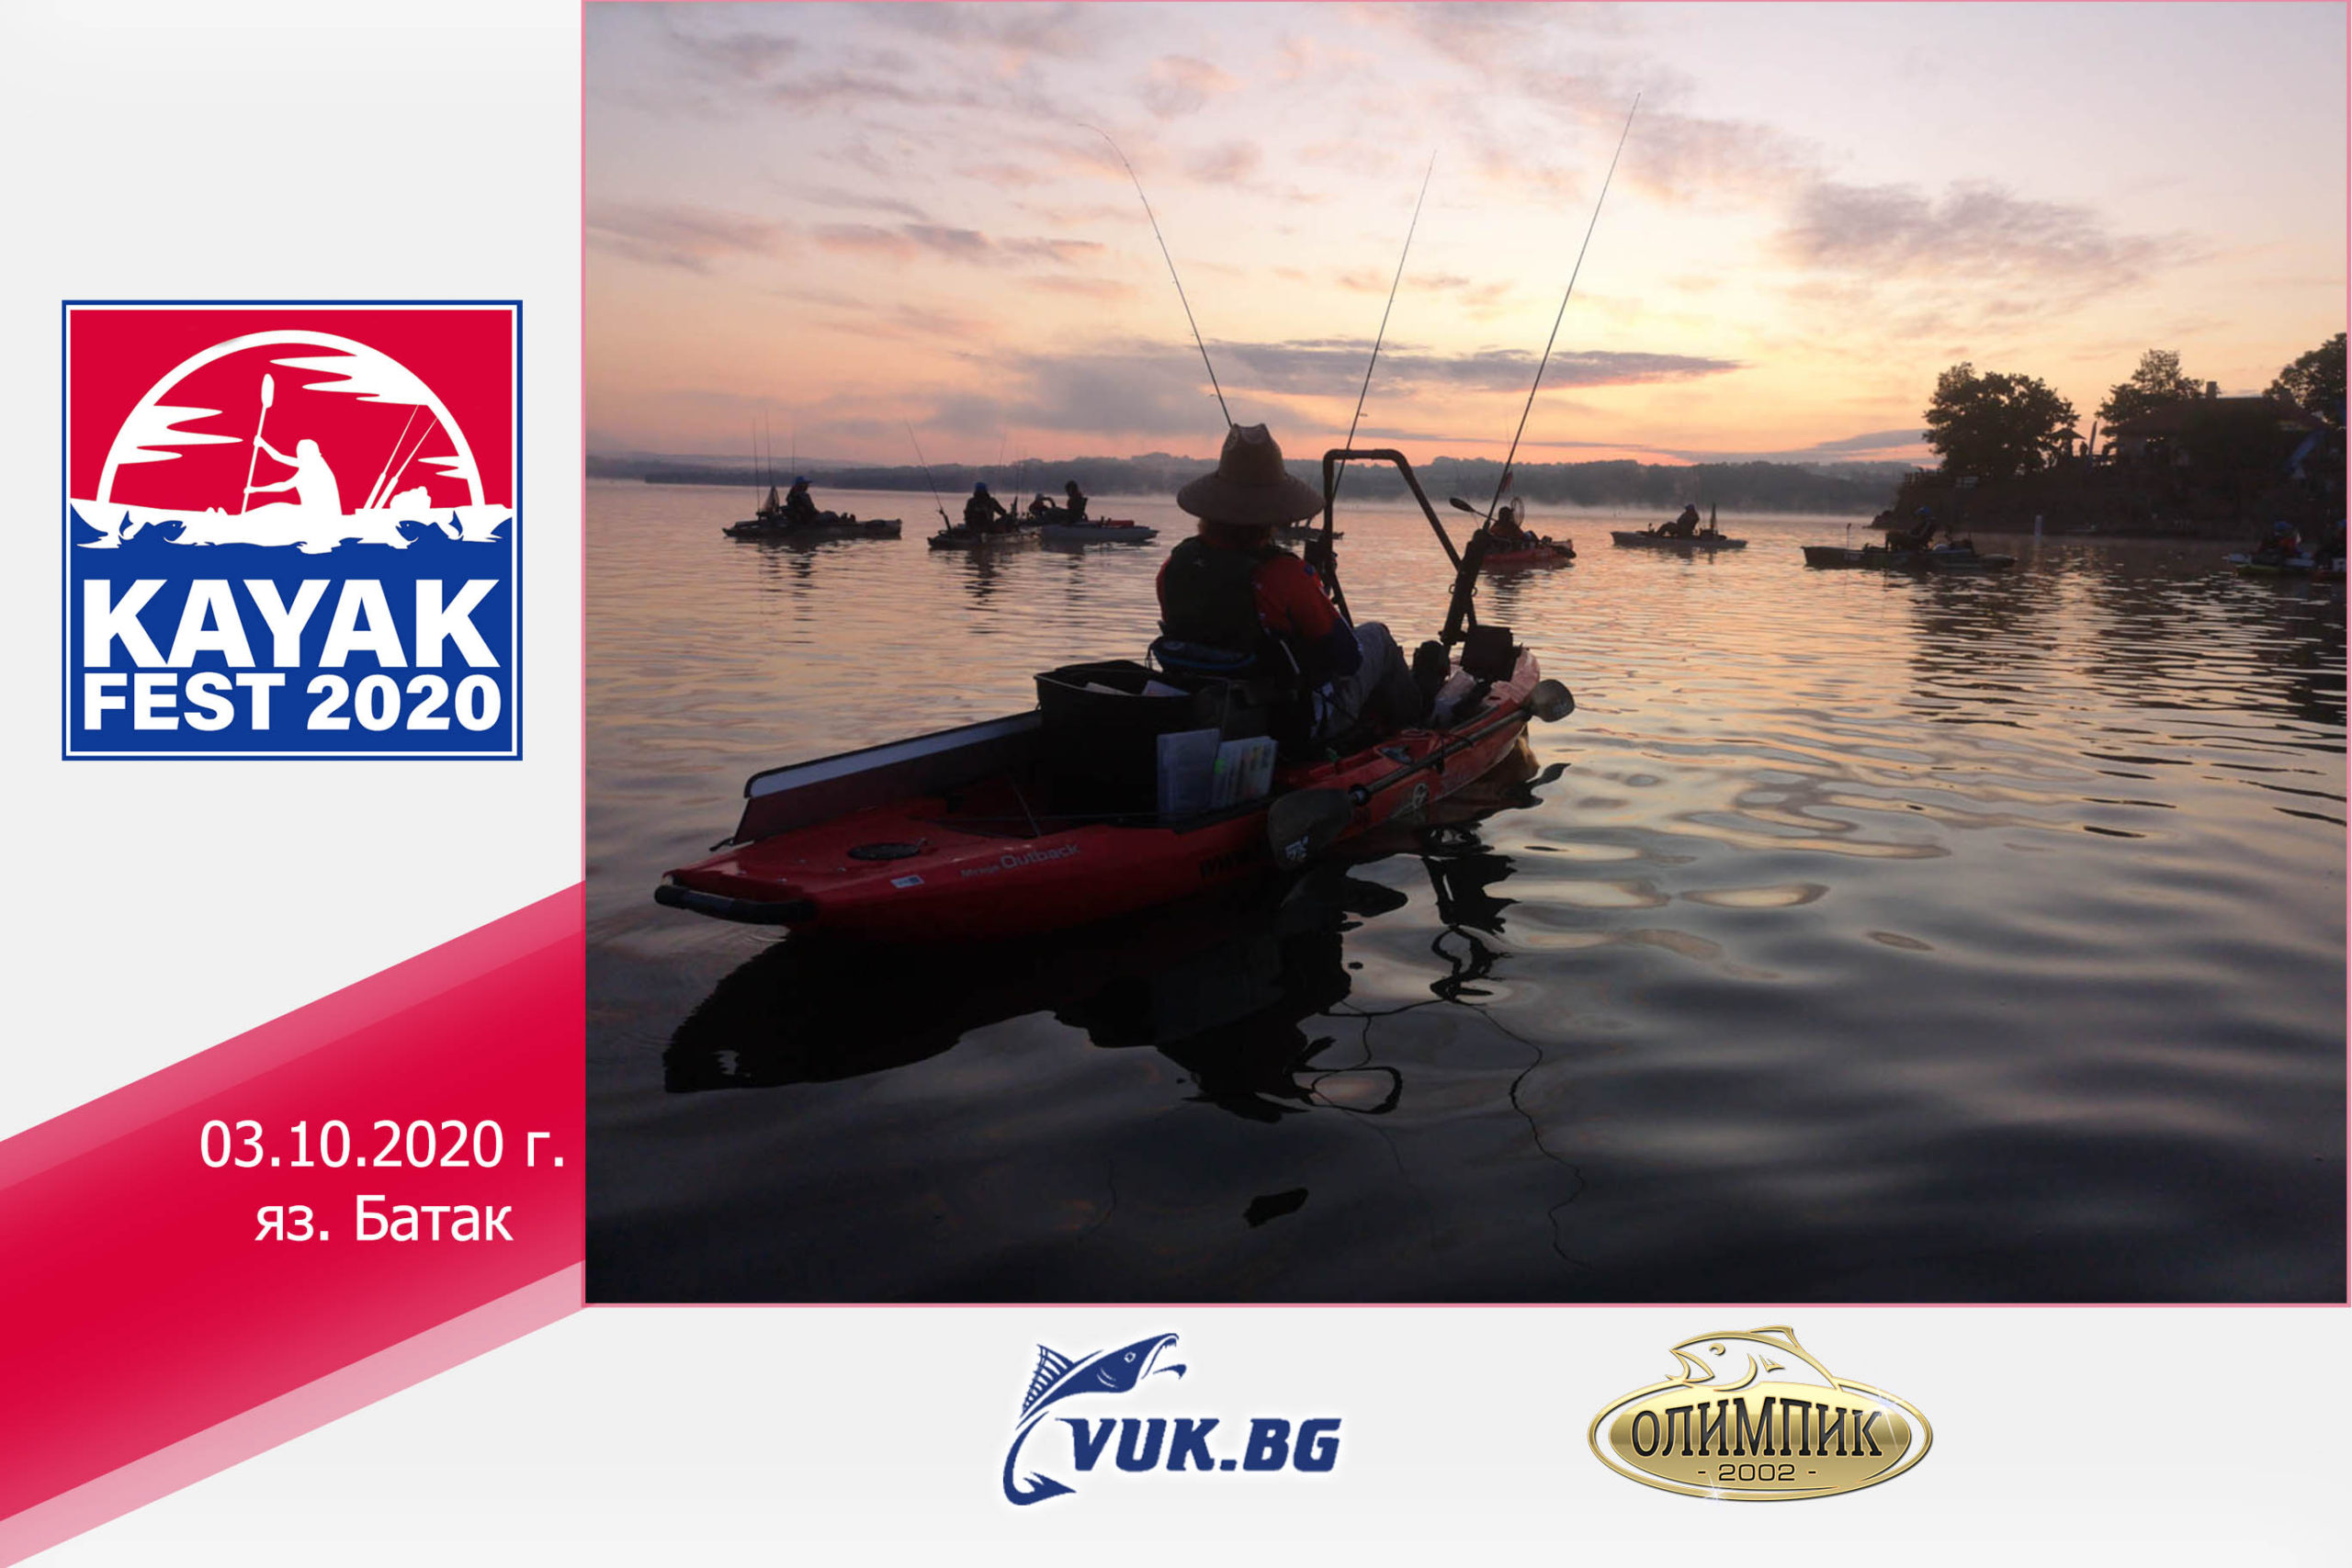 Kayak Fest Batak 2020 - организация и регламент